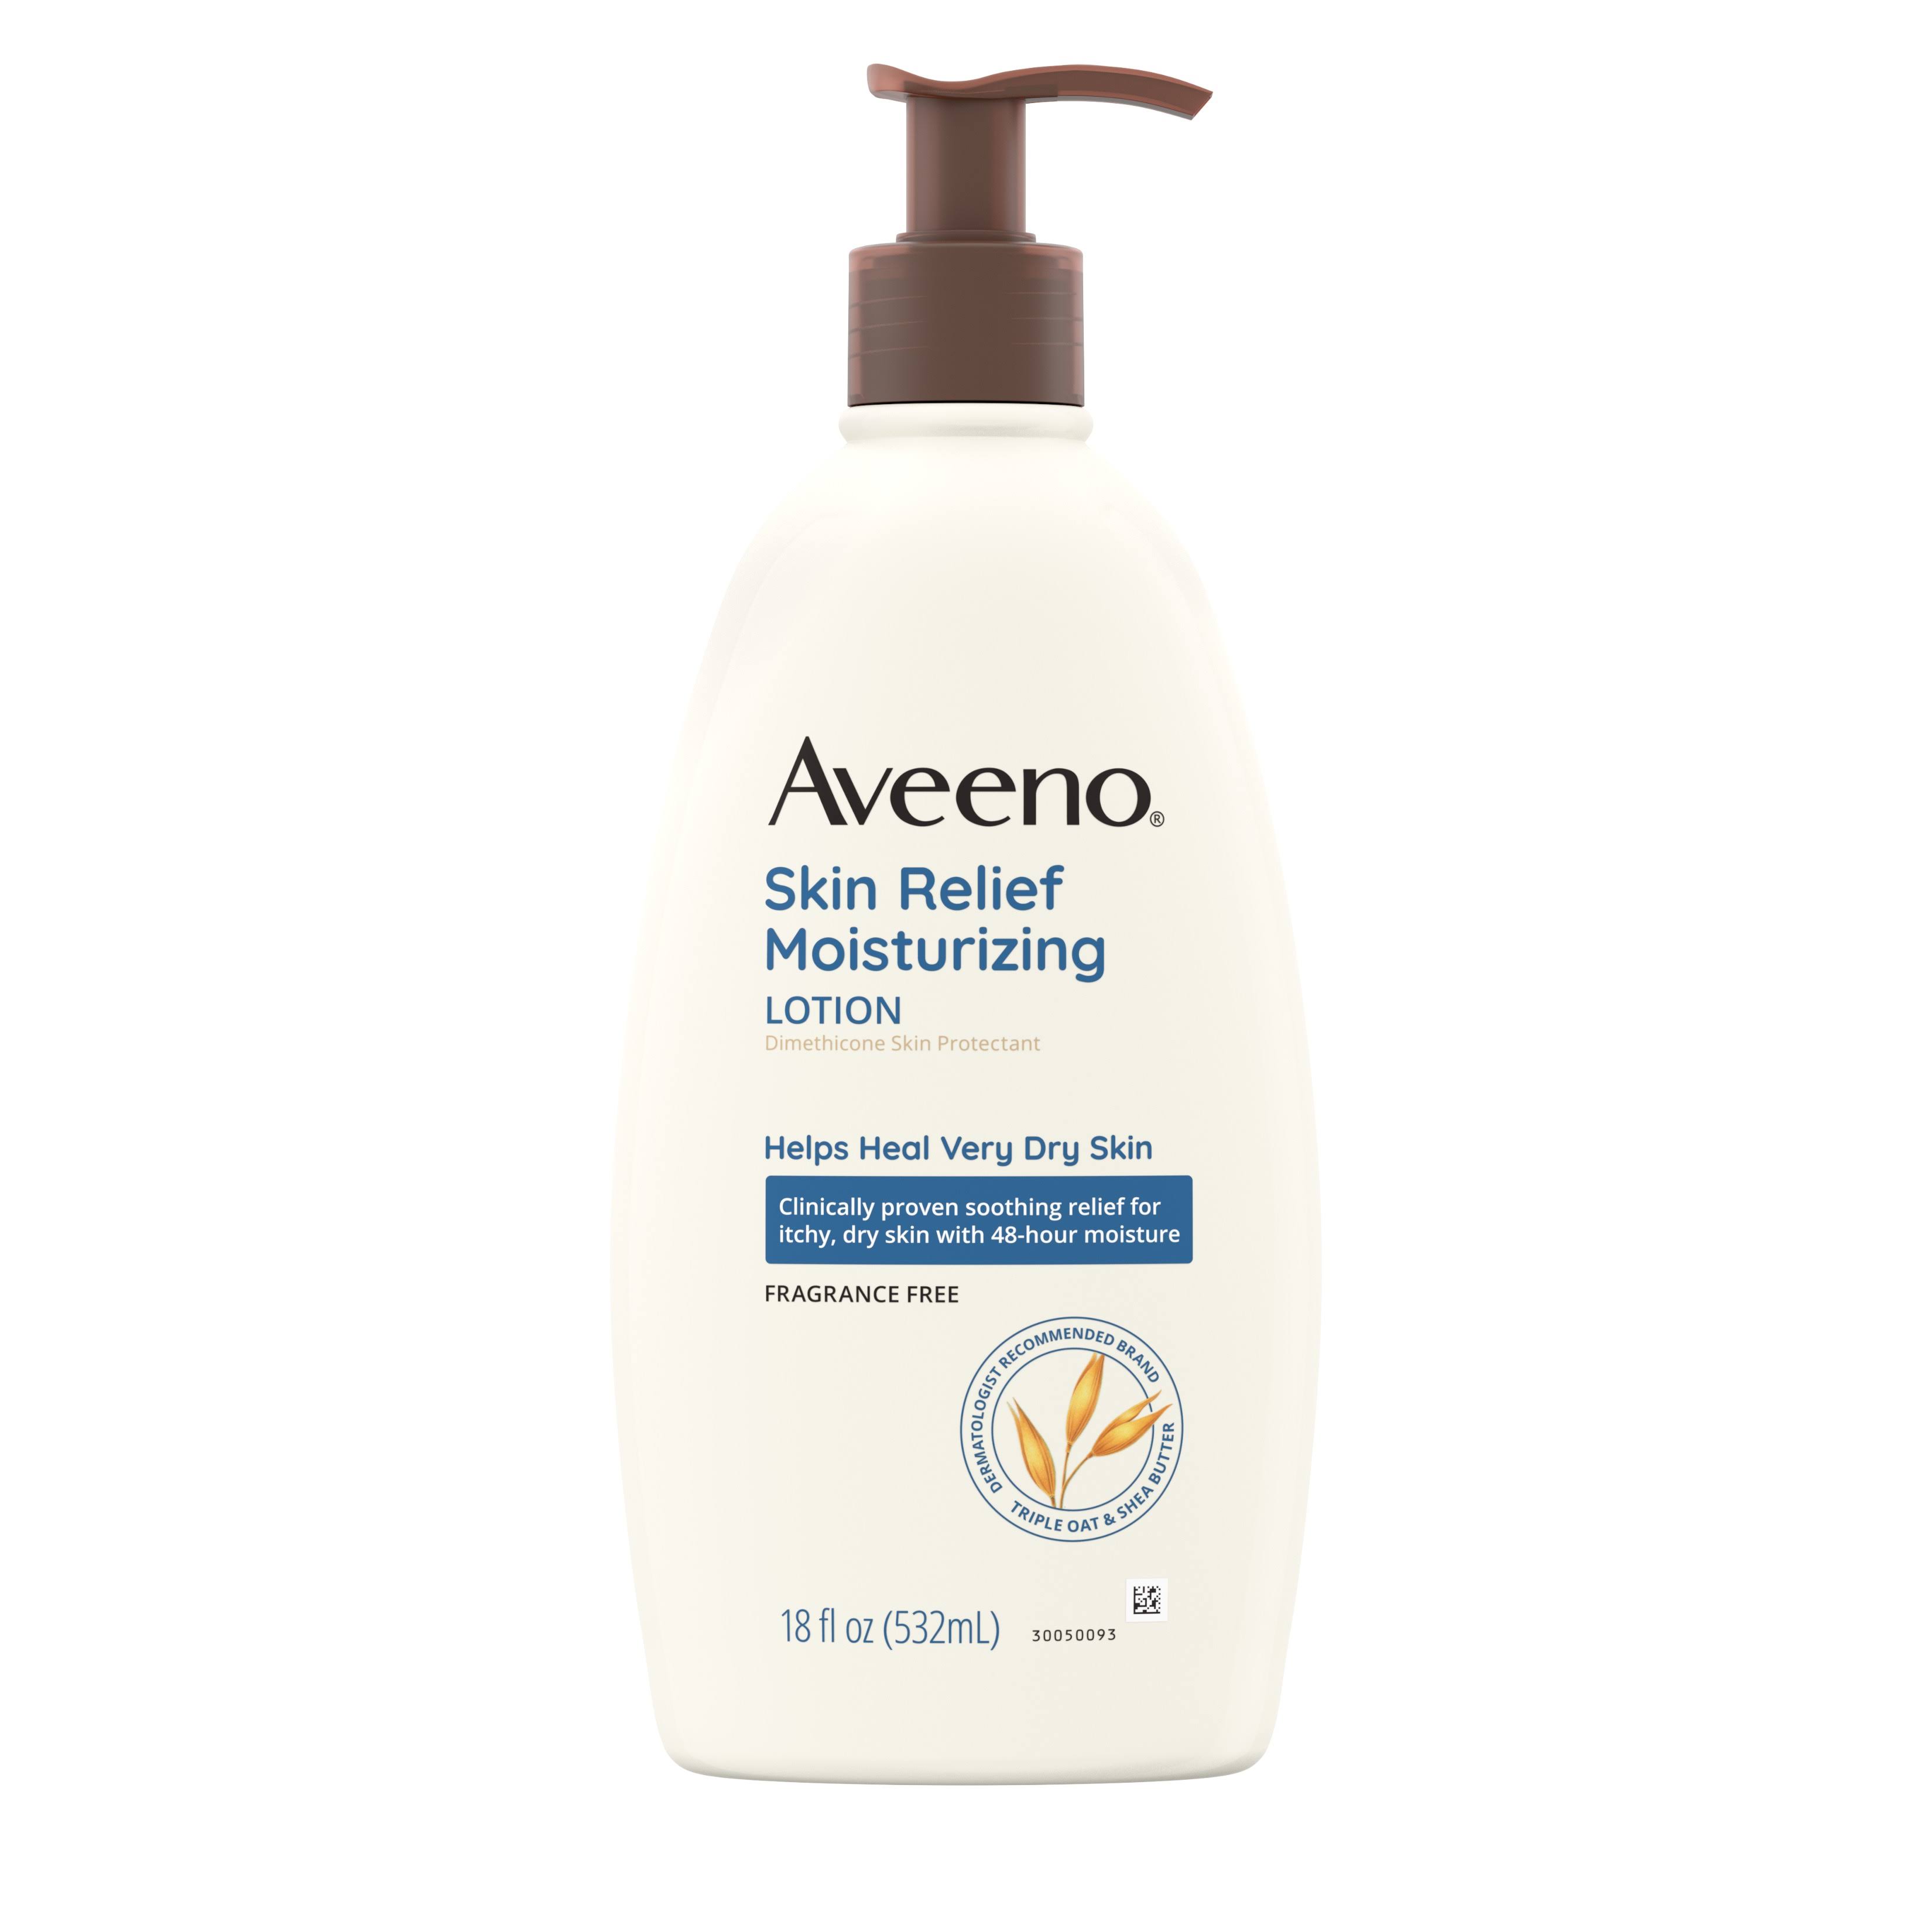 Aveeno Skin Relief Moisturizing Lotion for Sensitive Skin - 18oz